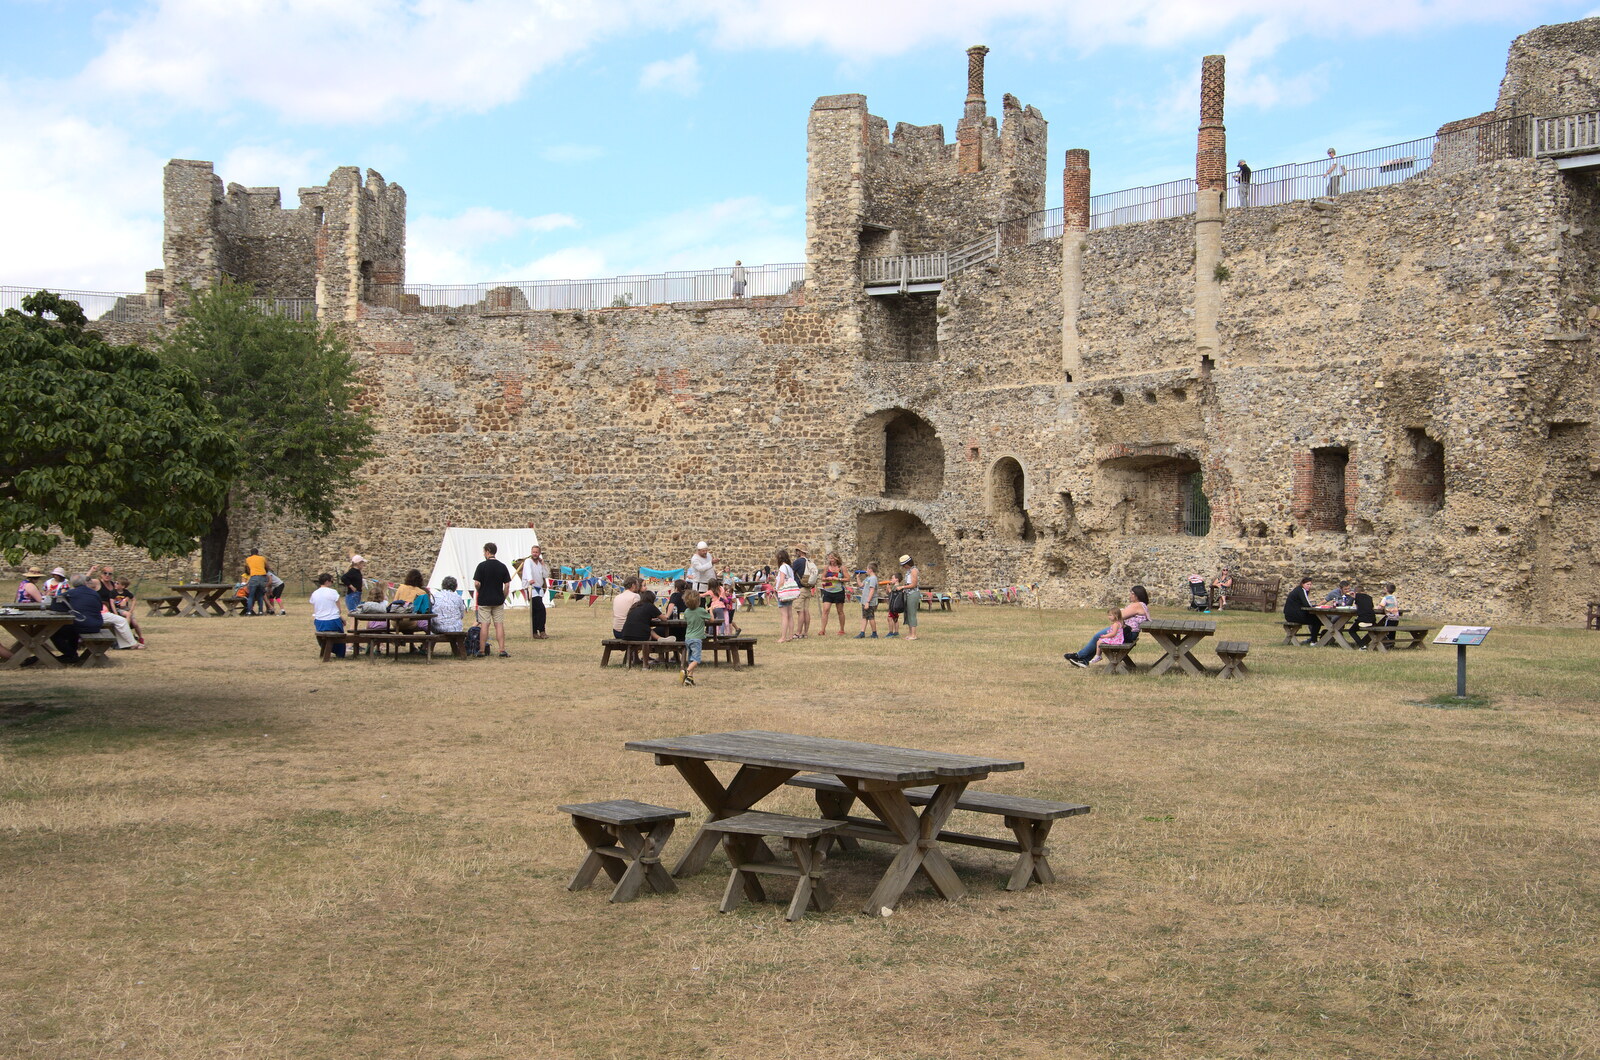 A Trip to Framlingham, Suffolk - 28th July 2022: Inside the castle walls